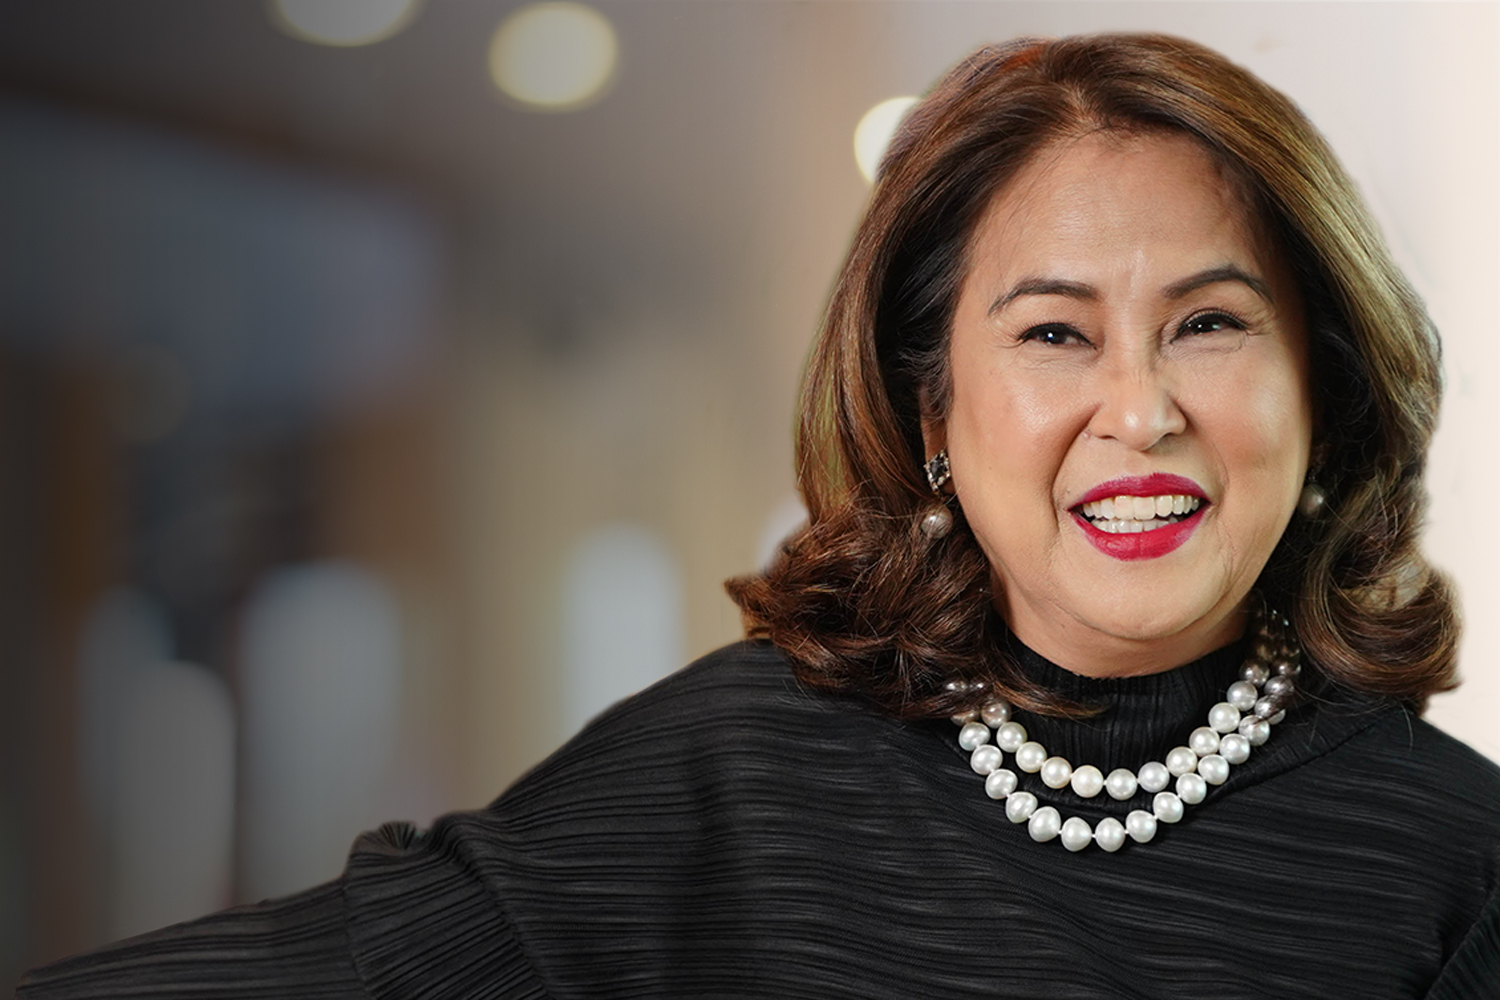 100 Most Influential Filipino Women on LinkedIn 2022